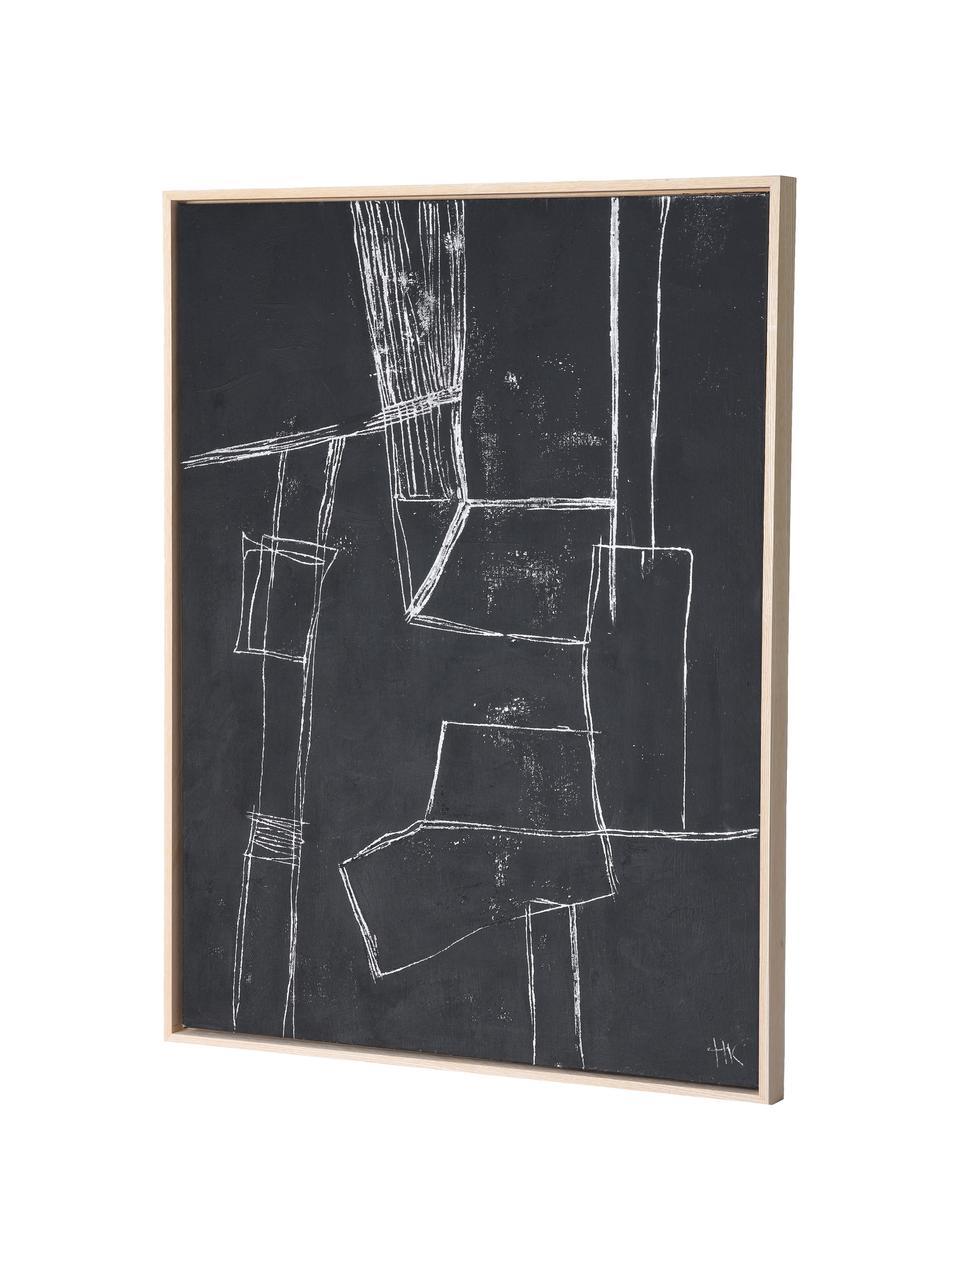 Gerahmtes Leinwandbild Brutalism, Bild: Leinwand, Farbe, Rahmen: Eschenholz, Schwarz, Weiß, B 60 x H 80 cm